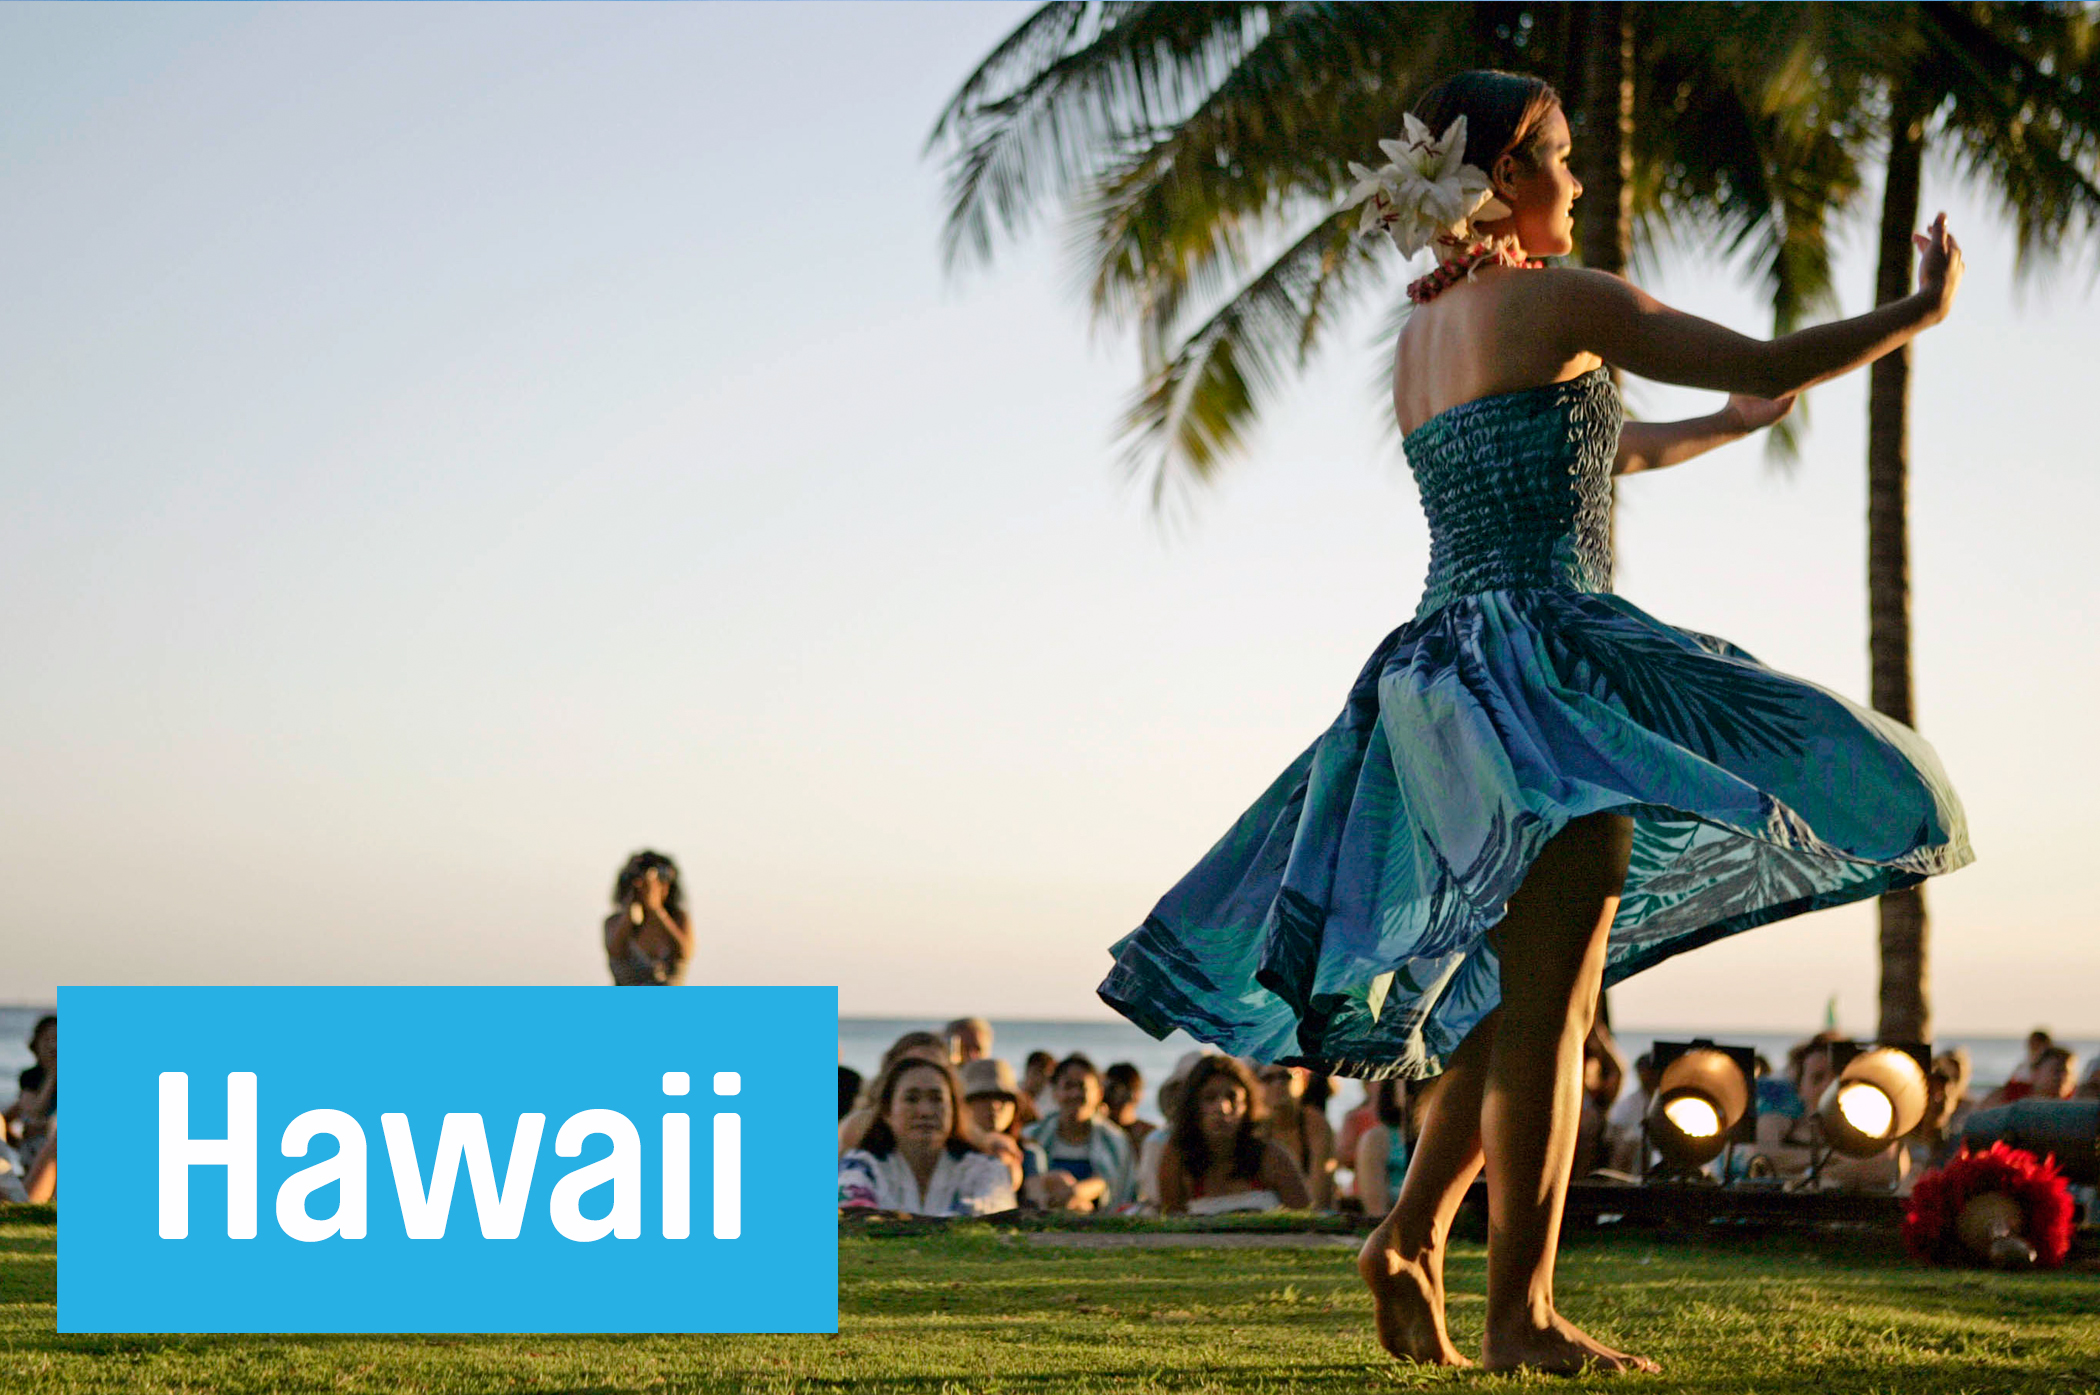 Watch Polynesian hula dancers get down near the Hyatt Regency Waikiki, at the waterside <a href="http://www.waikikiimprovement.com/waikiki-calendar-of-events/kuhio-beach-hula-show" target="_blank">Kuhio Beach Torchlighting and Hula Show</a>. And don’t forget to say mahalo.